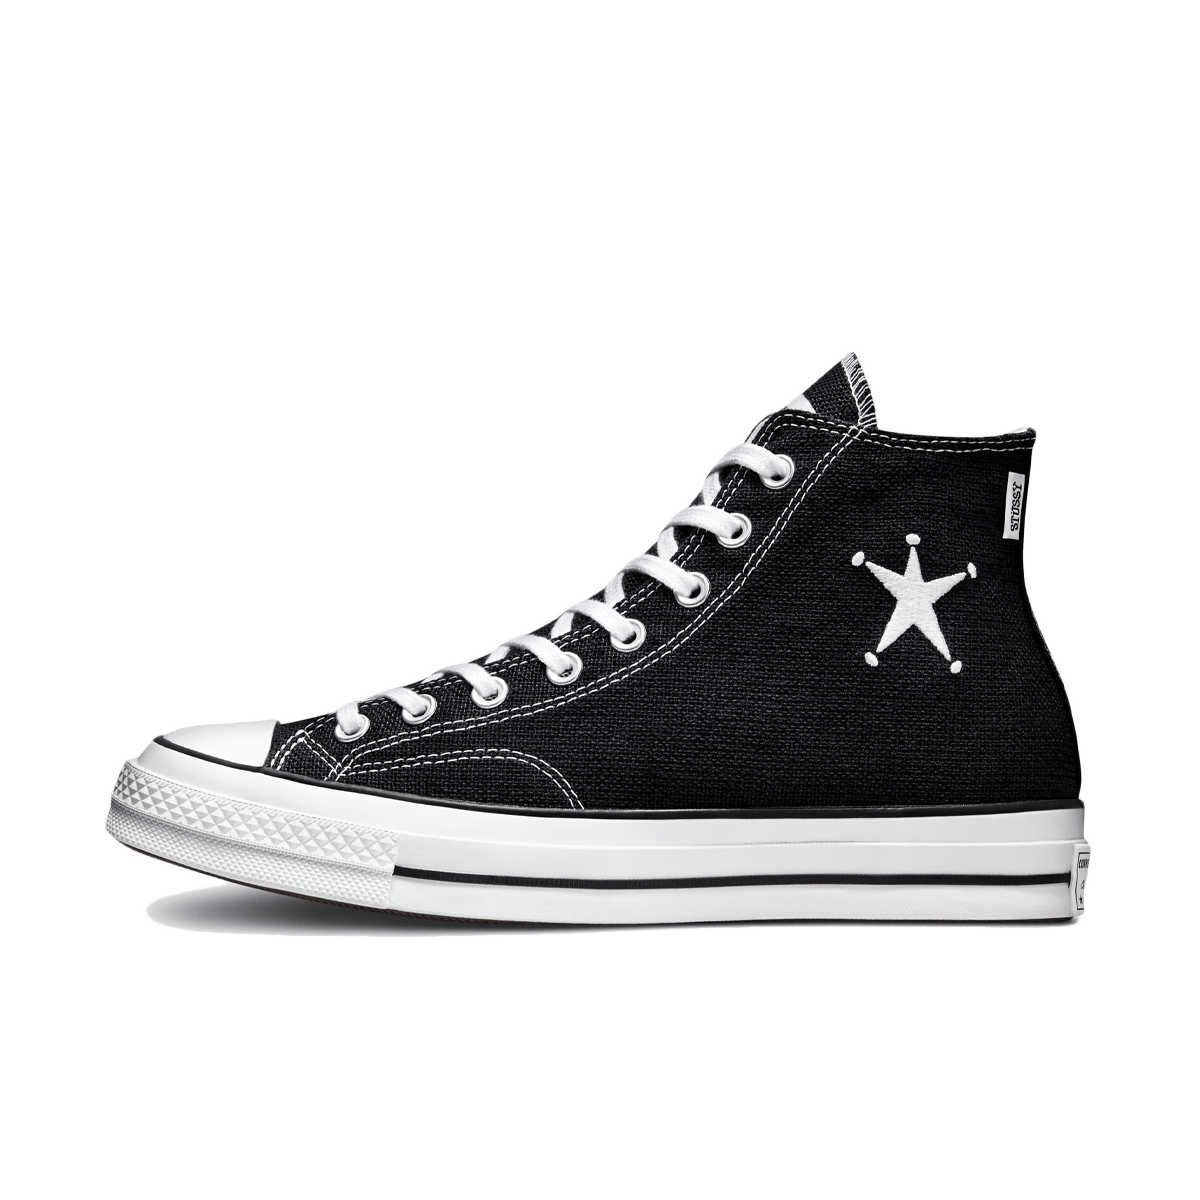 Stüssy x Converse Chuck 70 'Black' A01765C